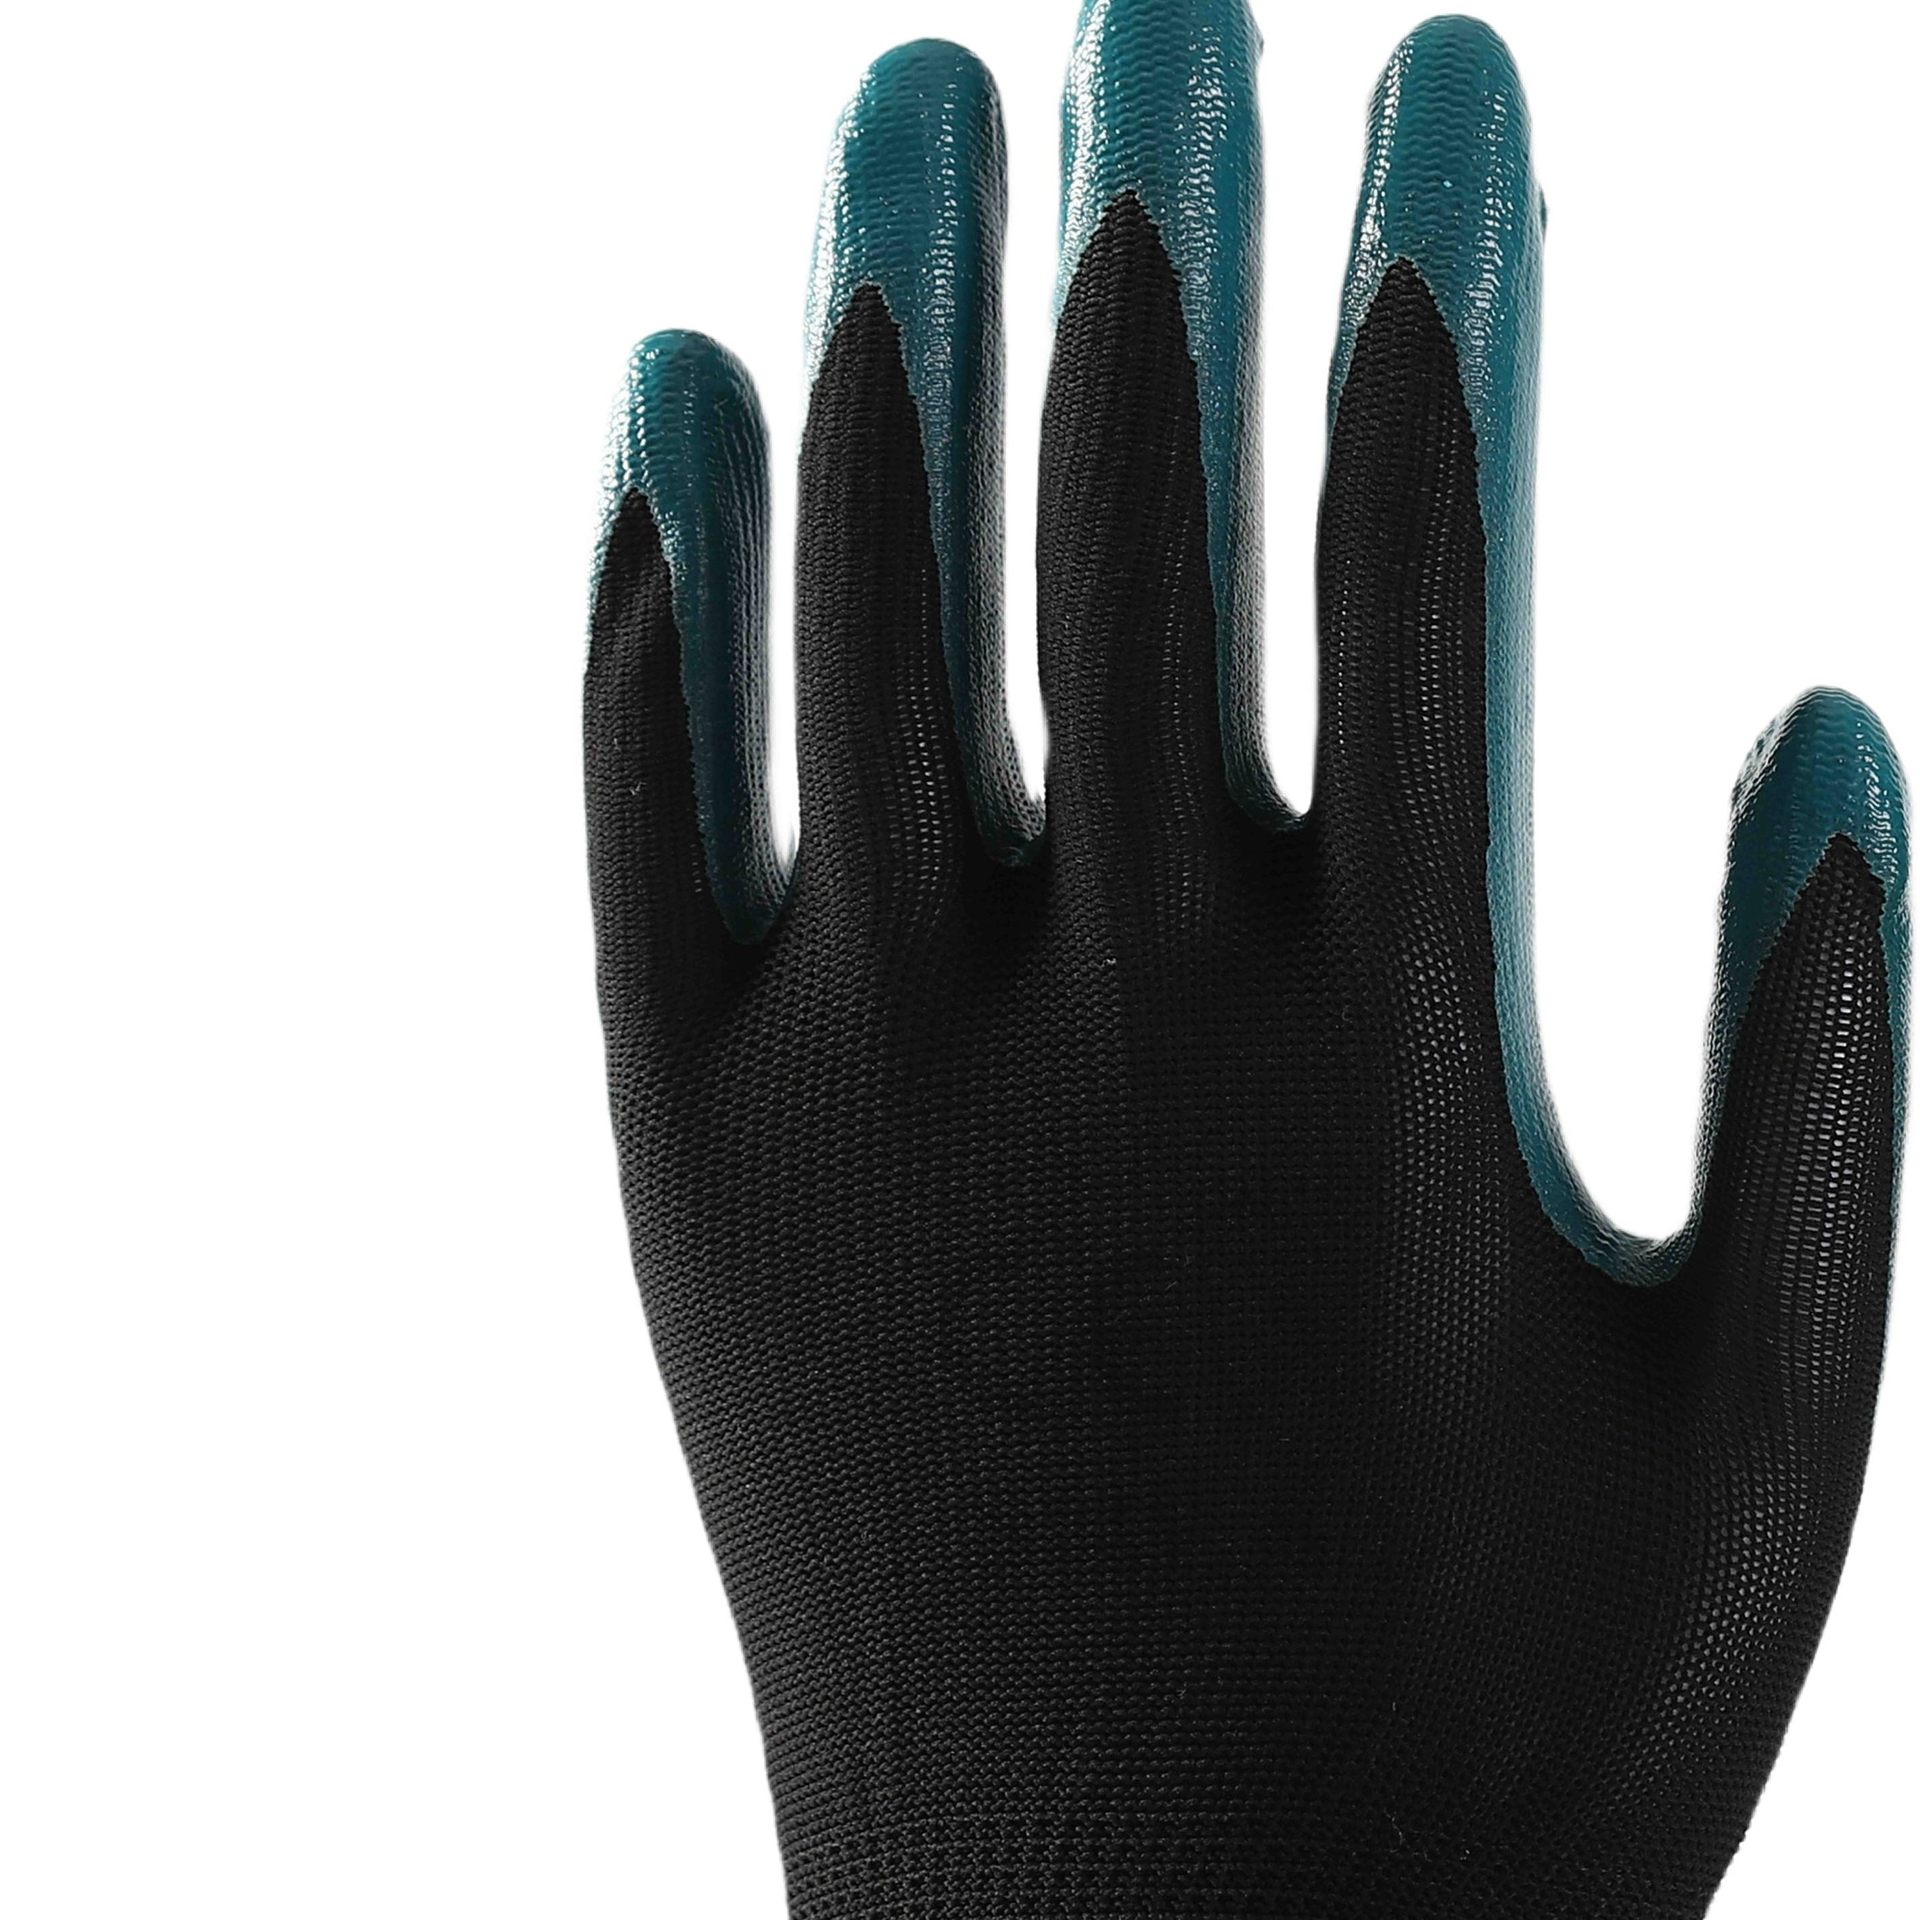                 Blue polyester with black nitrile coating gloves            